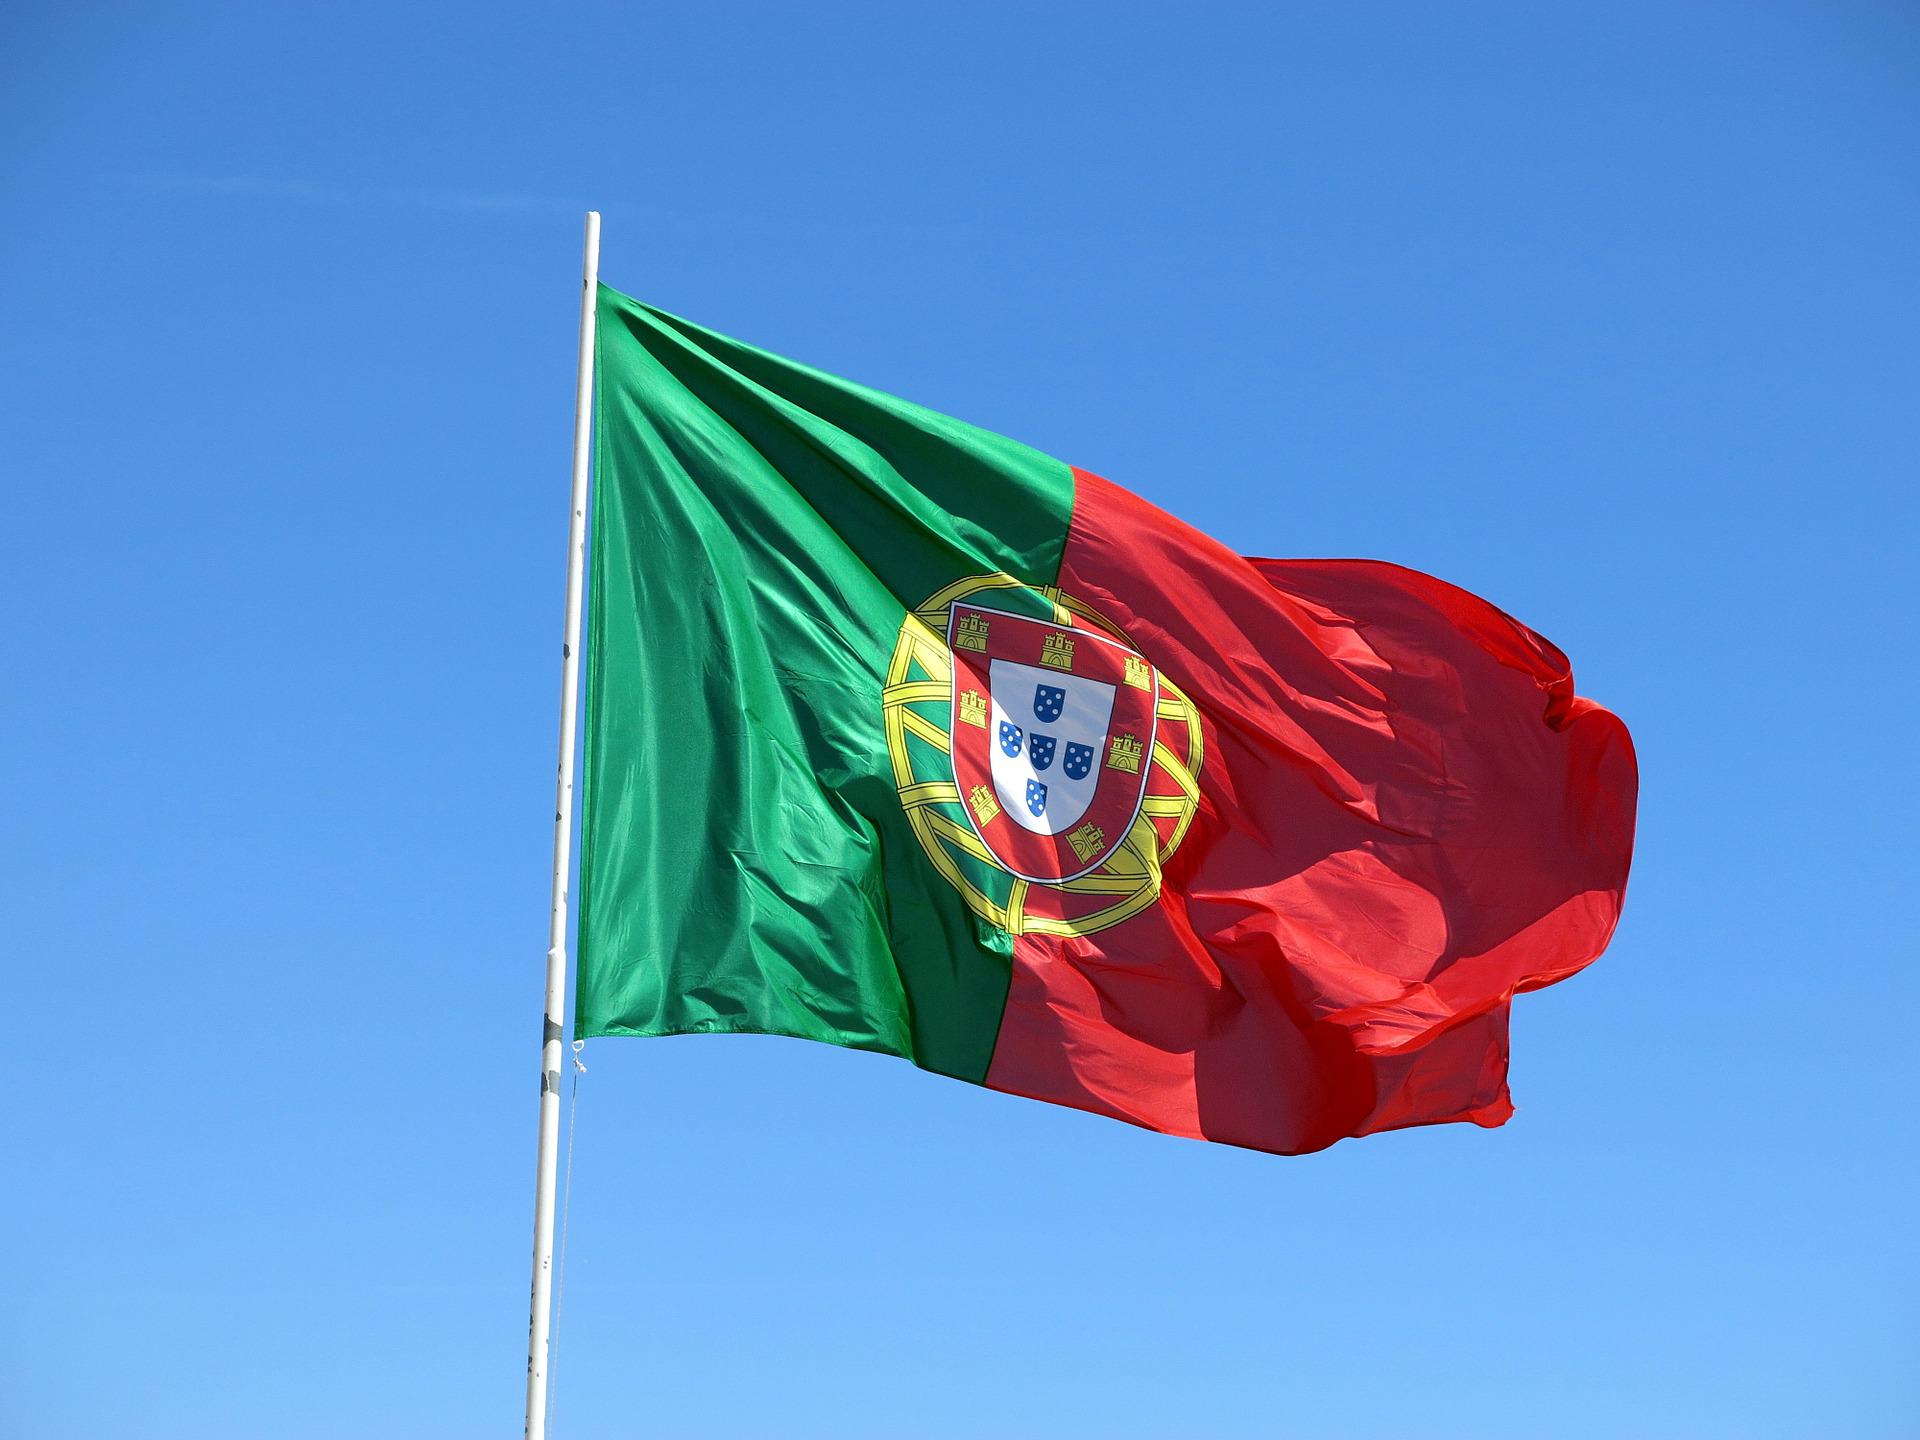 FNI Portugal